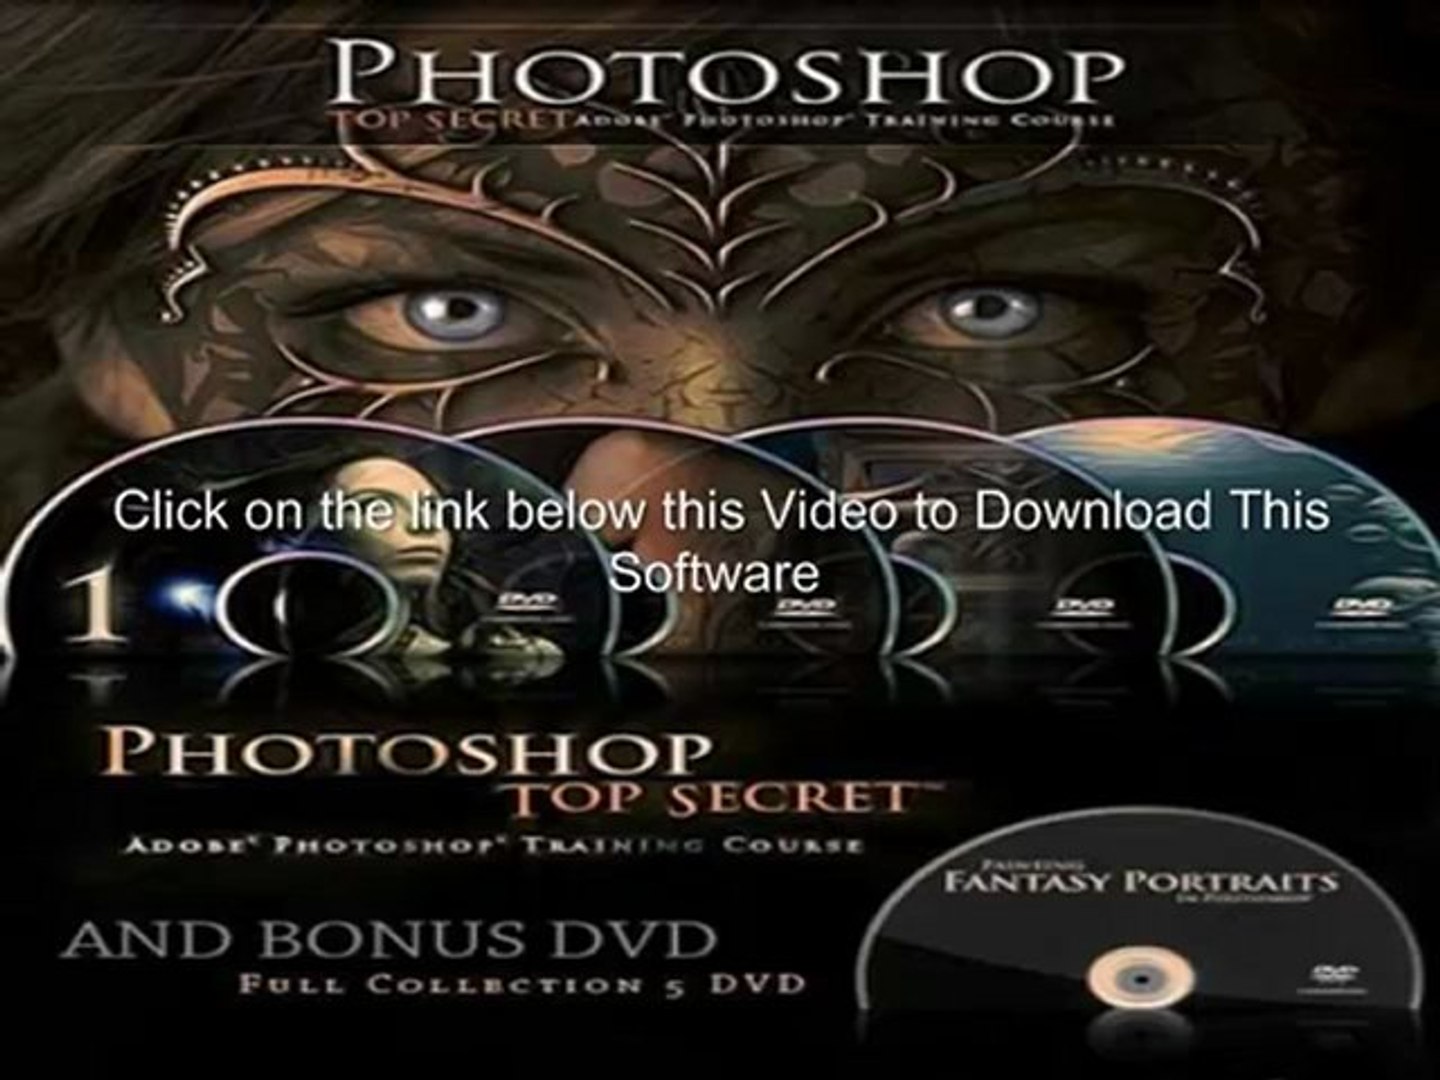 Photoshop Top Secrets Full Collection 4 DVD DVD Bonus - video Dailymotion